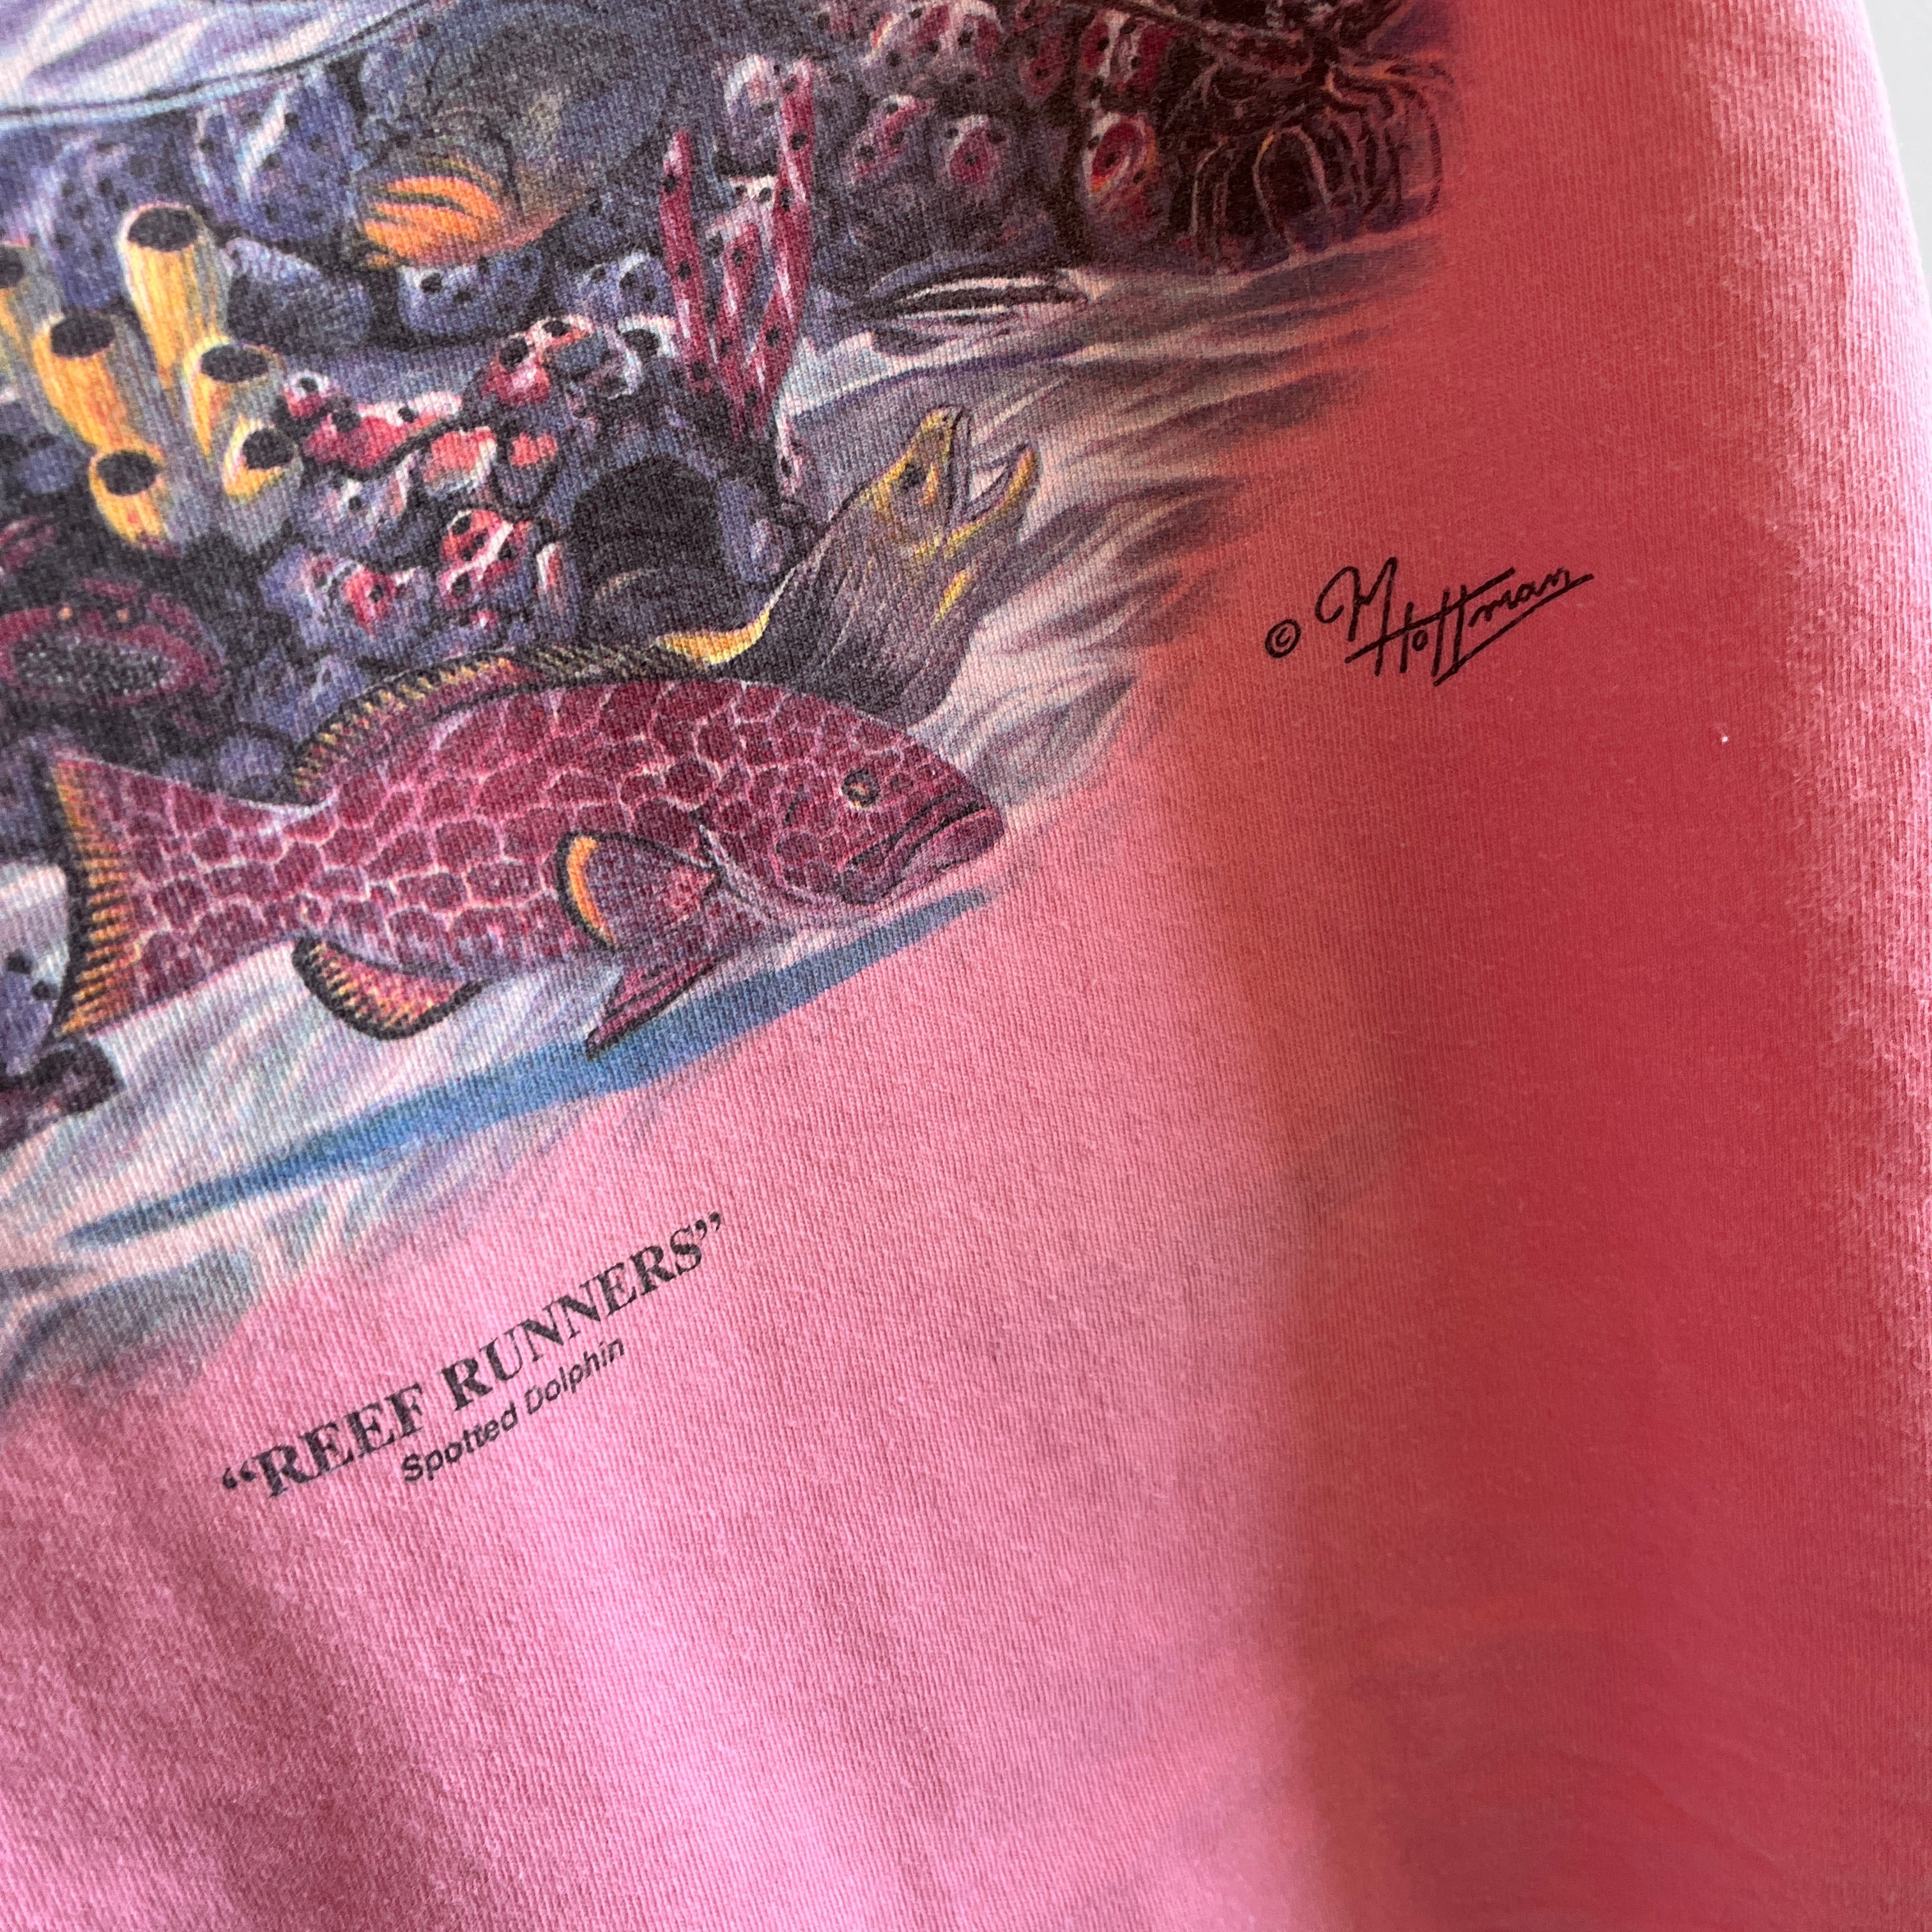 1980s Environmental Art Wear - Reef Runners - Backside T-Shirt